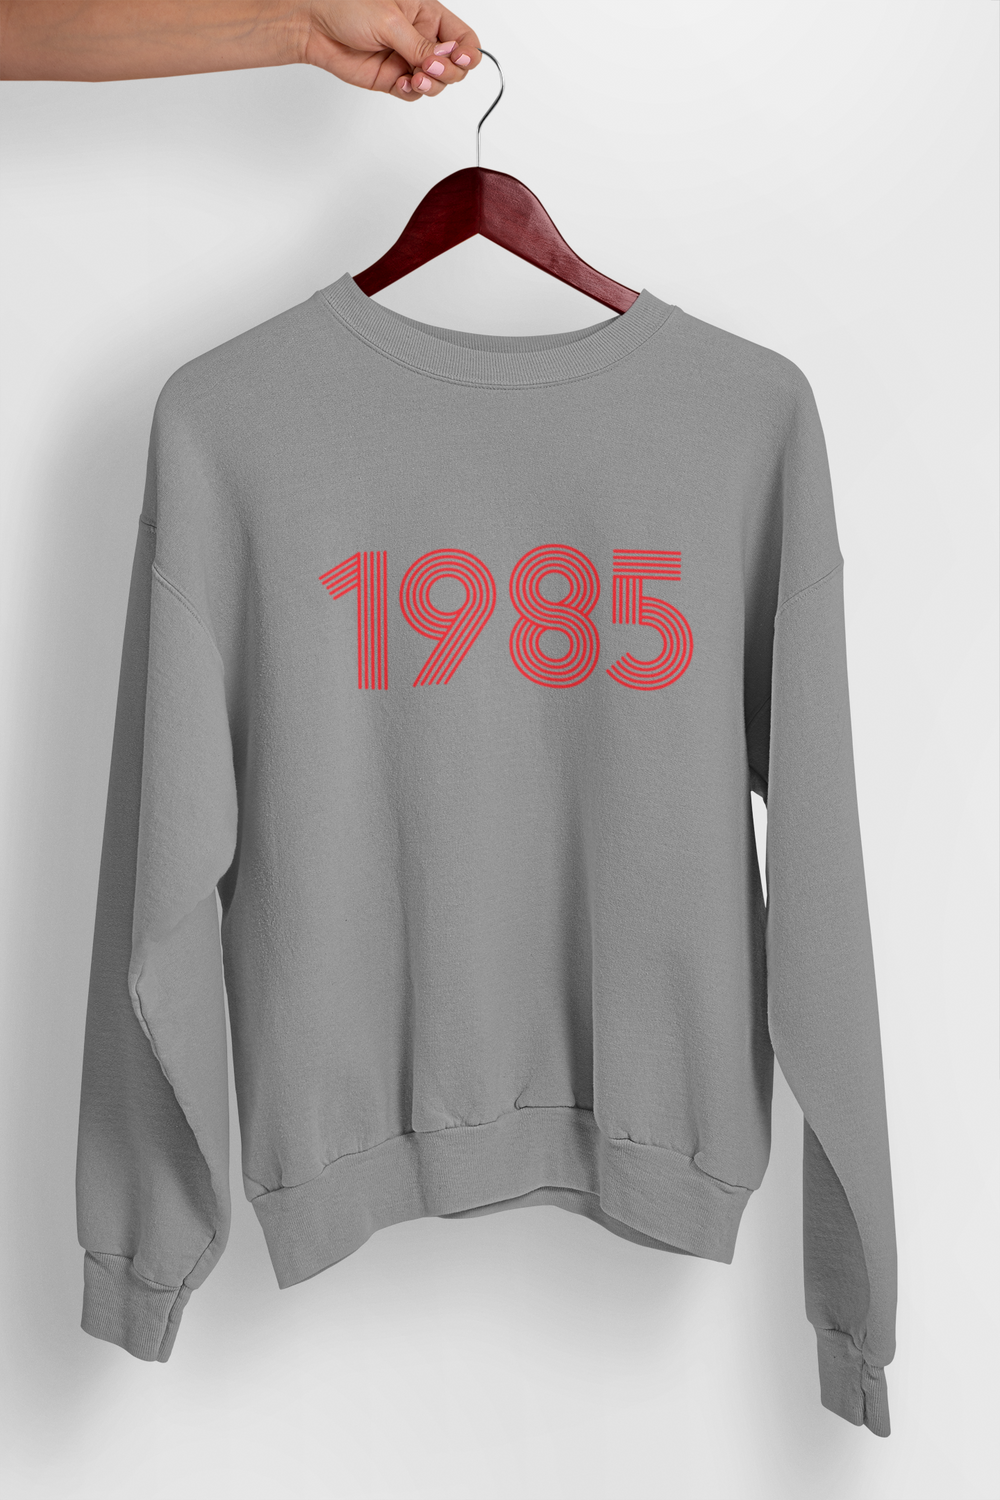 1985 Retro Red Unisex Sweater - TalkPeng